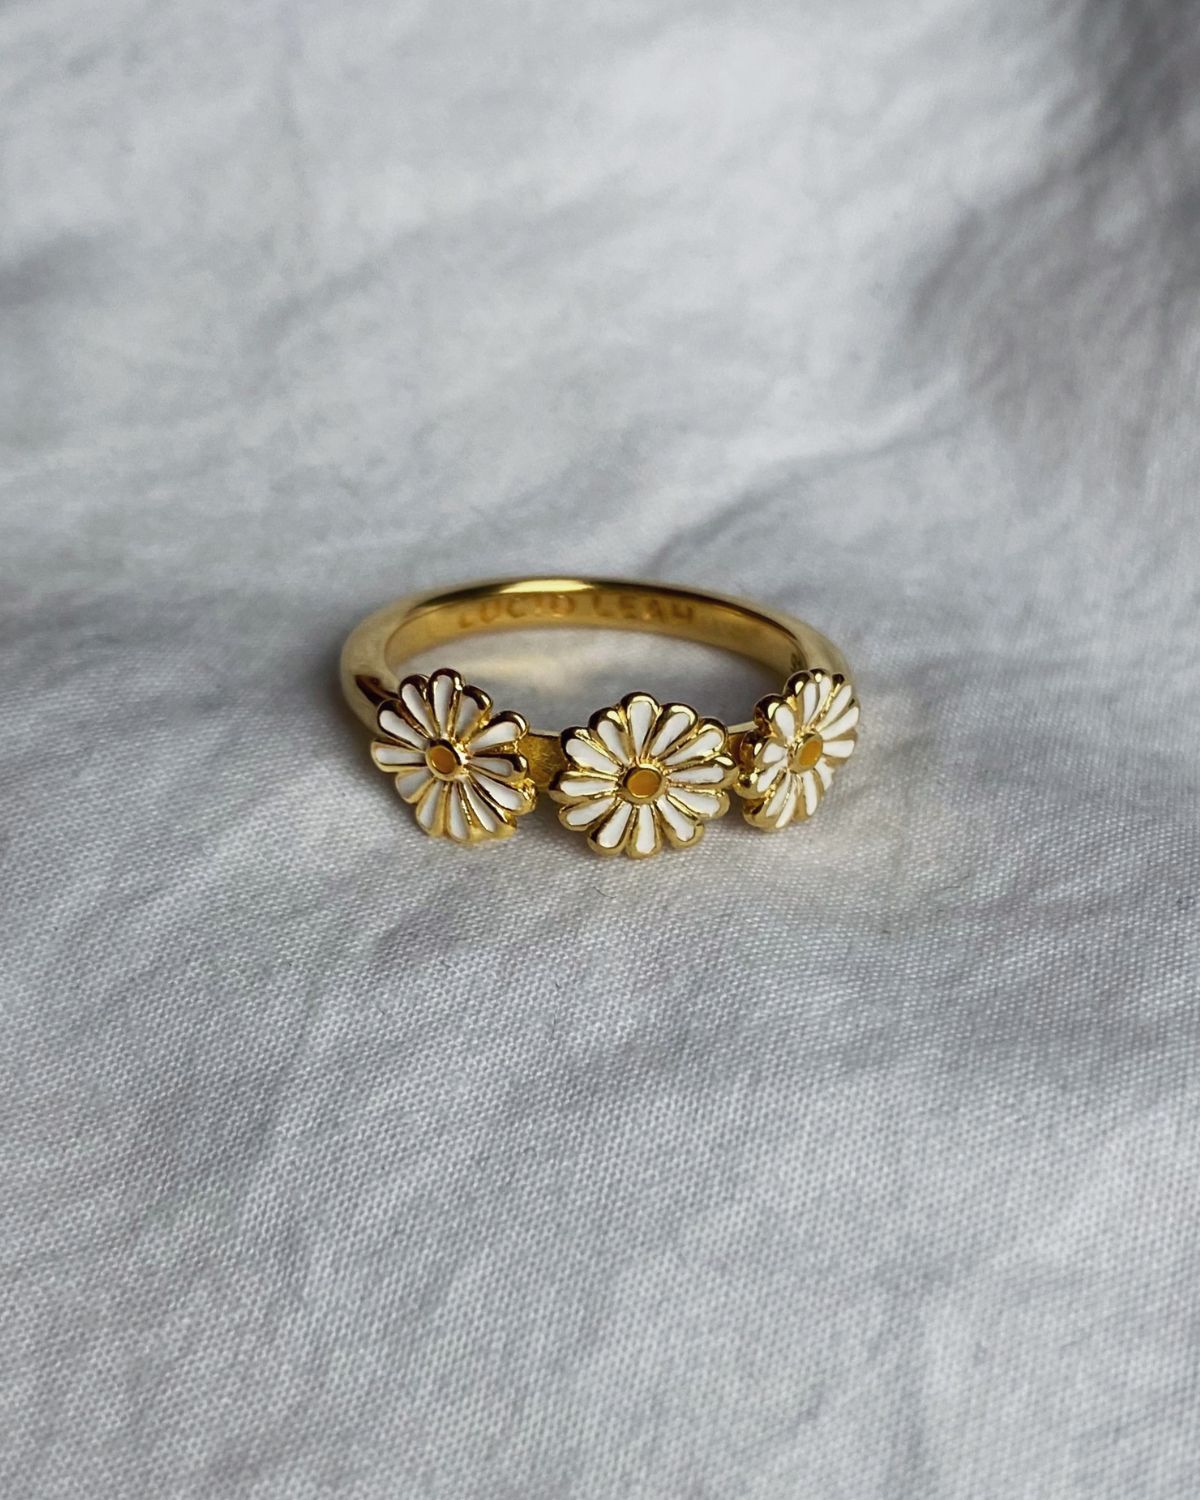 Daisy ring - gold vermeil